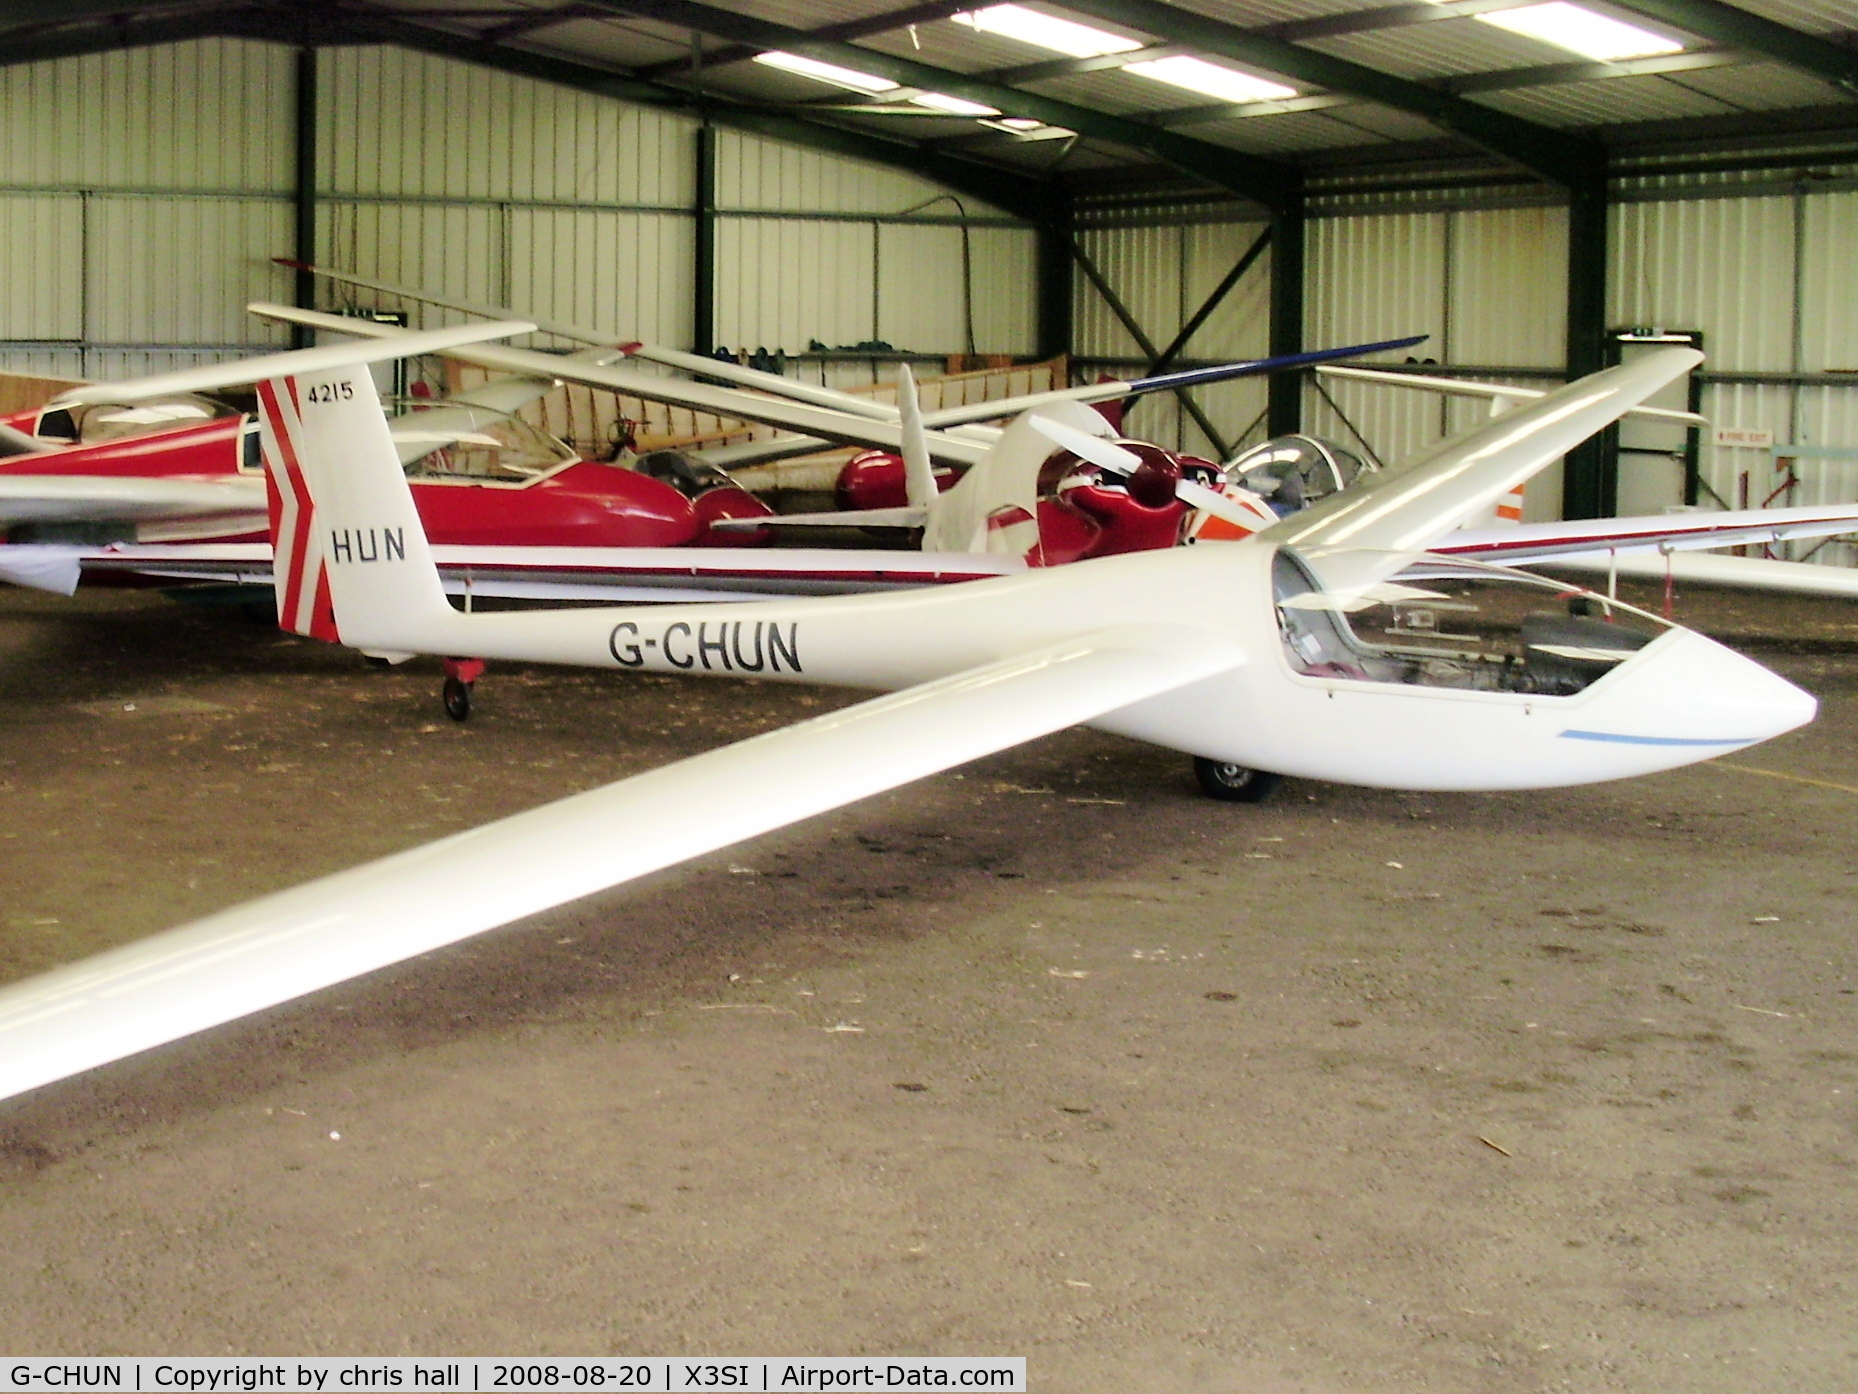 G-CHUN, 1978 Grob G-102 Astir CS Jeans C/N 2089, GROB G102 ASTIR CS JEANS, Staffordshire Gliding Club, Seighford Airfield